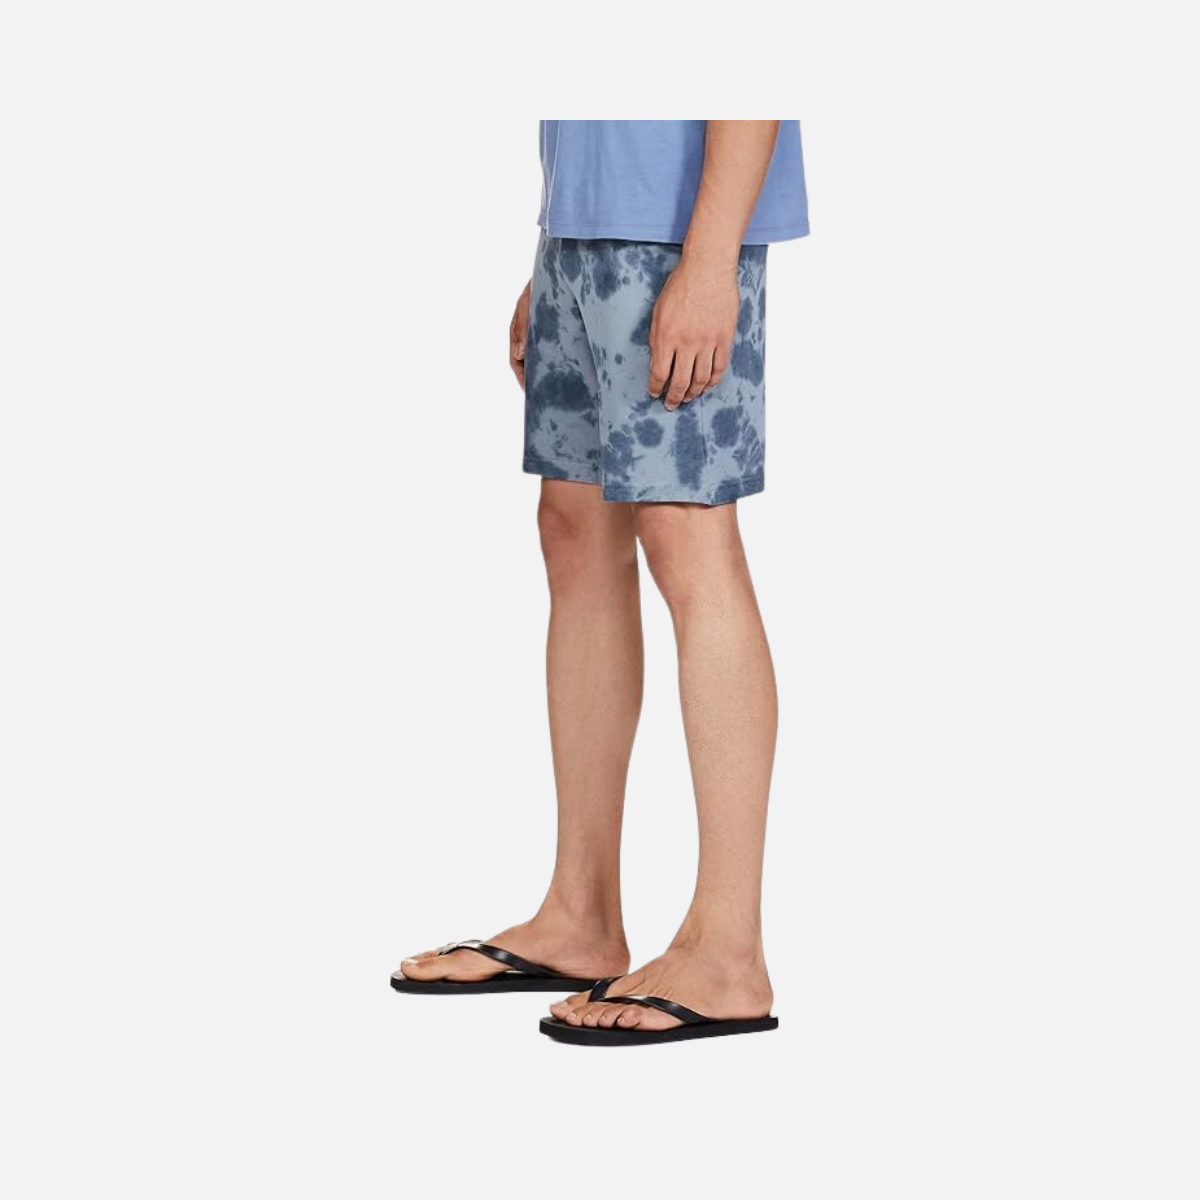 Skechers Men's Shorts -Blue/Gray